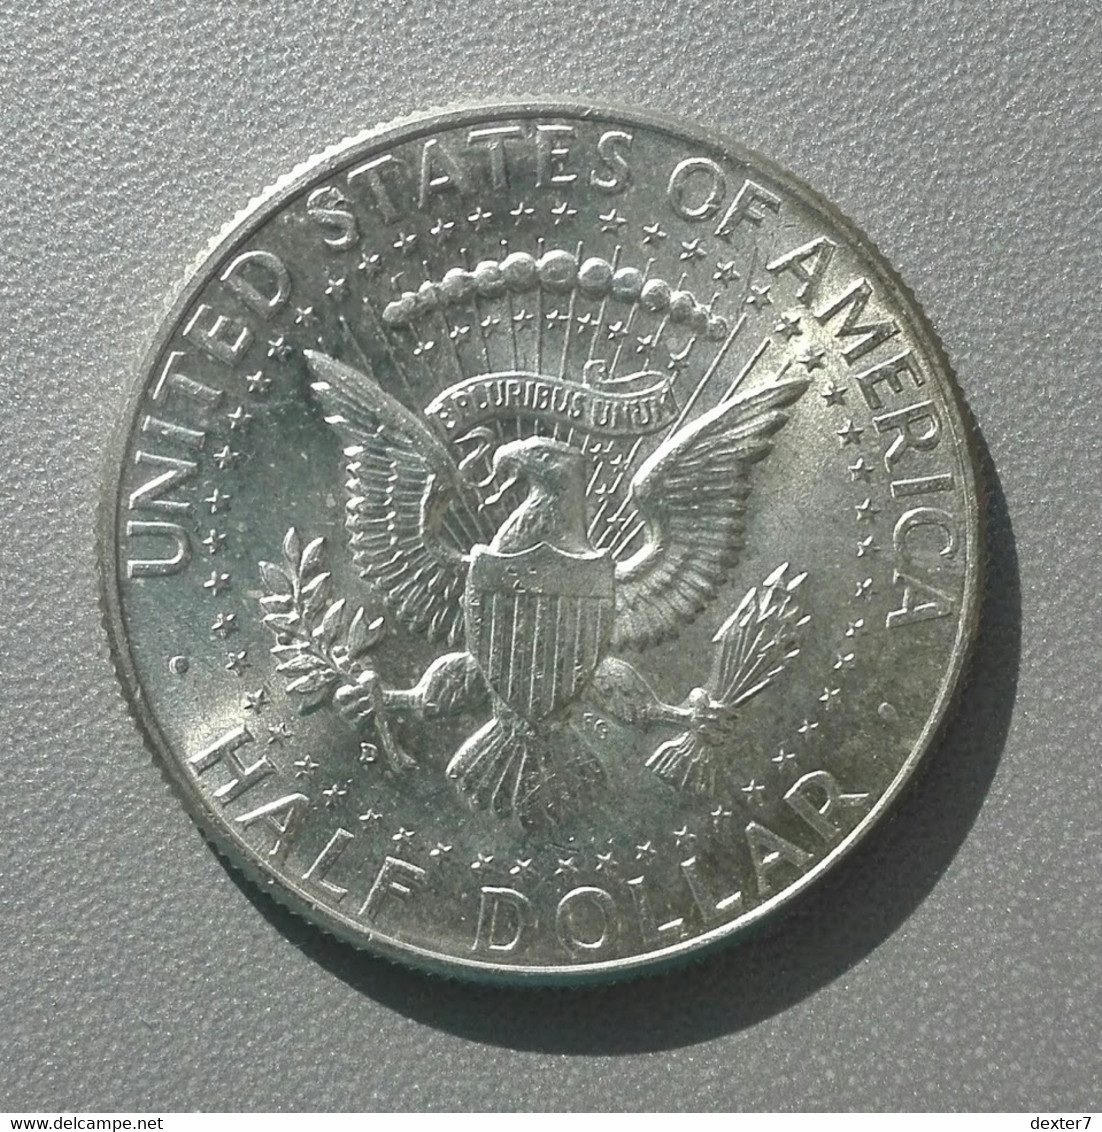 USA Stati Uniti - 1/2 Mezzo Dollaro 1964 Argento - United States Half Dollar Kennedy Silver Silber Argent [6] - 1964-…: Kennedy